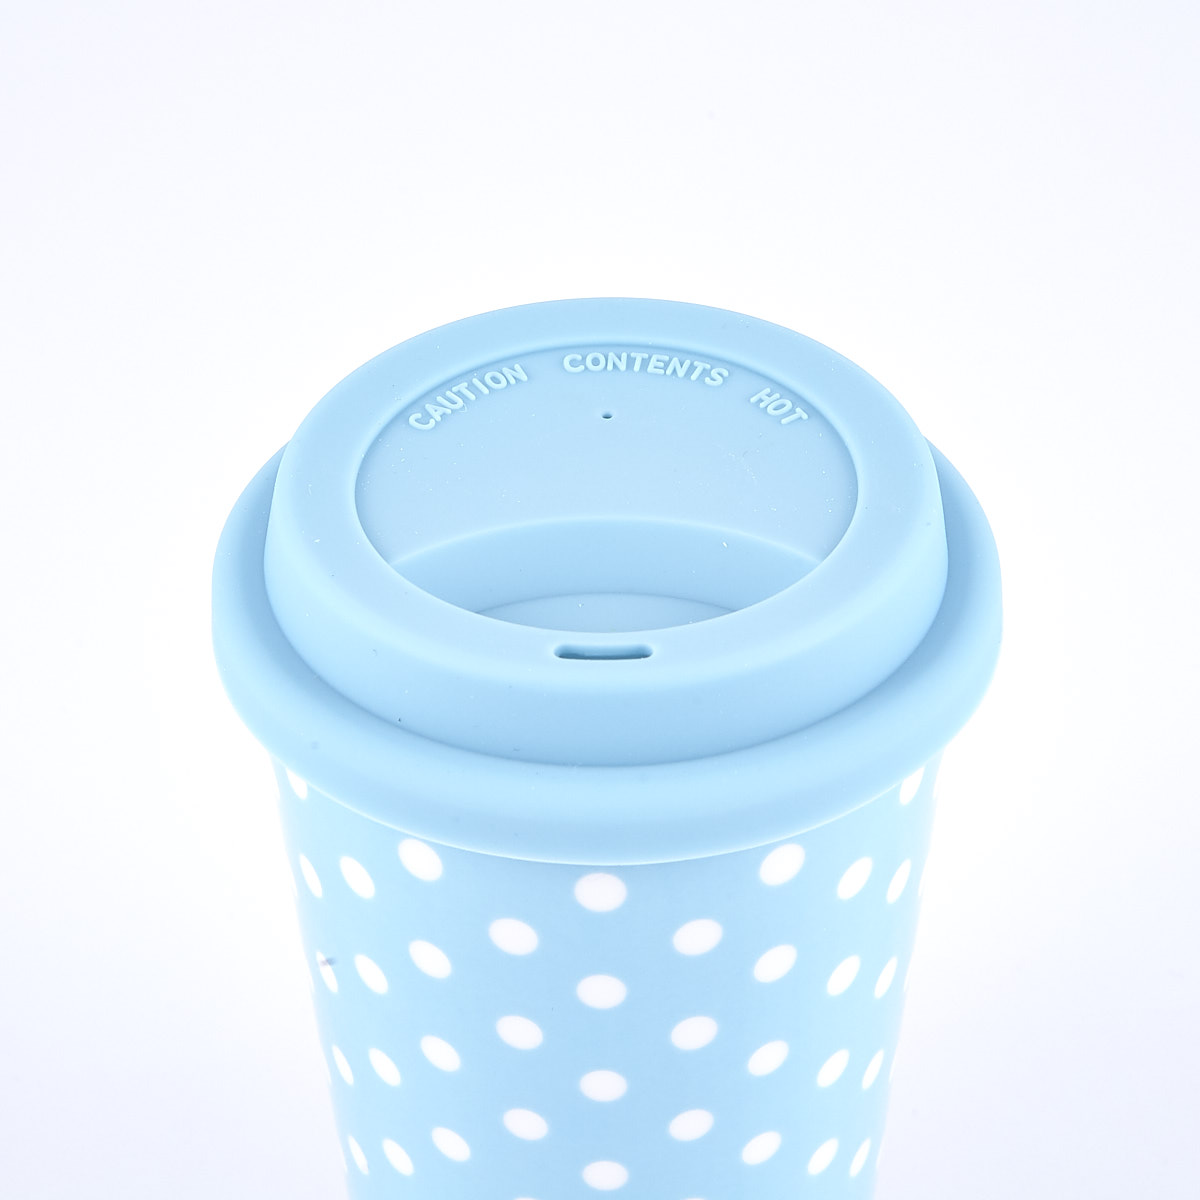 Blue Travel Mug with White Polka Dots